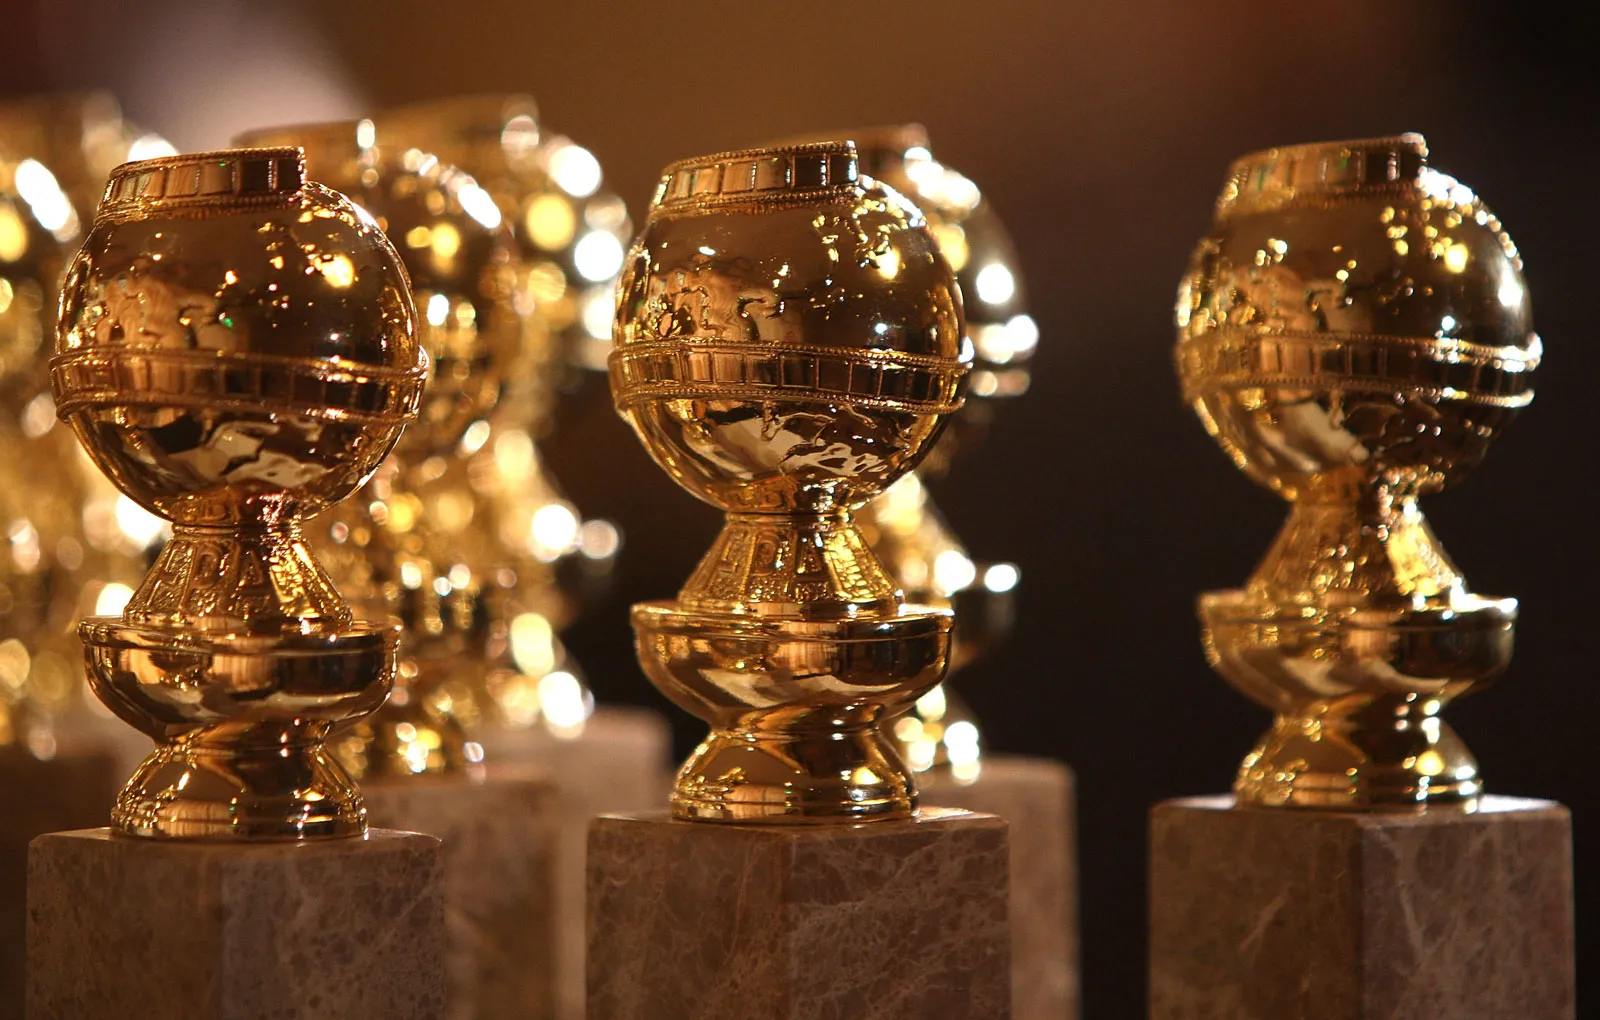 81st Golden Globe Award winners were announced